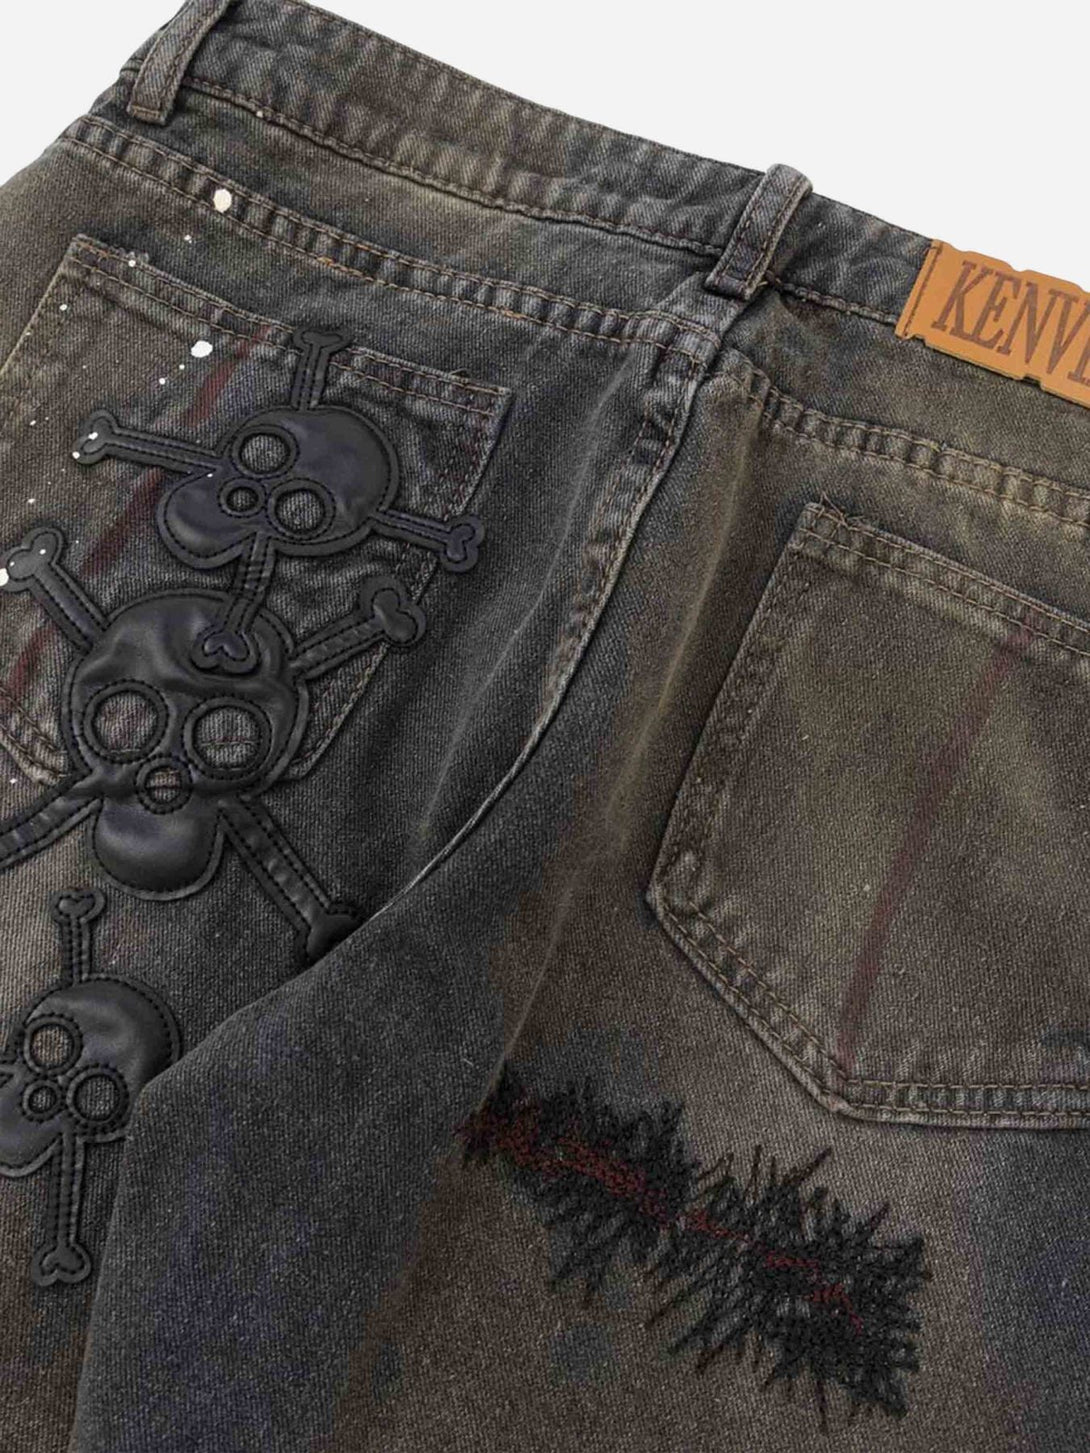 Majesda® - Leather Skull Splash Ink Micro-flared Jeans- Outfit Ideas - Streetwear Fashion - majesda.com